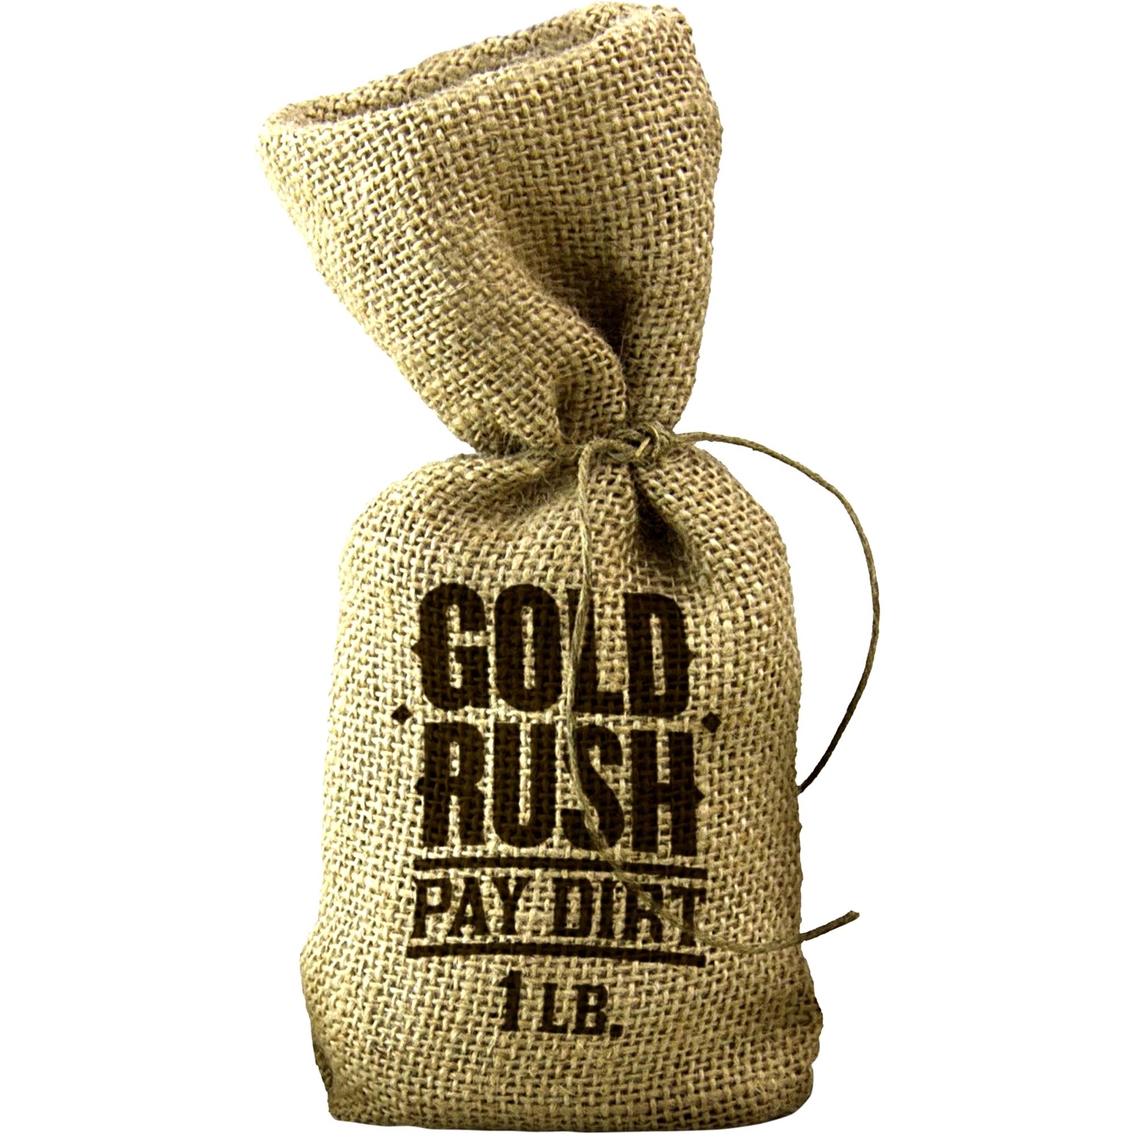 Gold Rush Paydirt Panning Kit - Gold Prospecting Mining Equipment